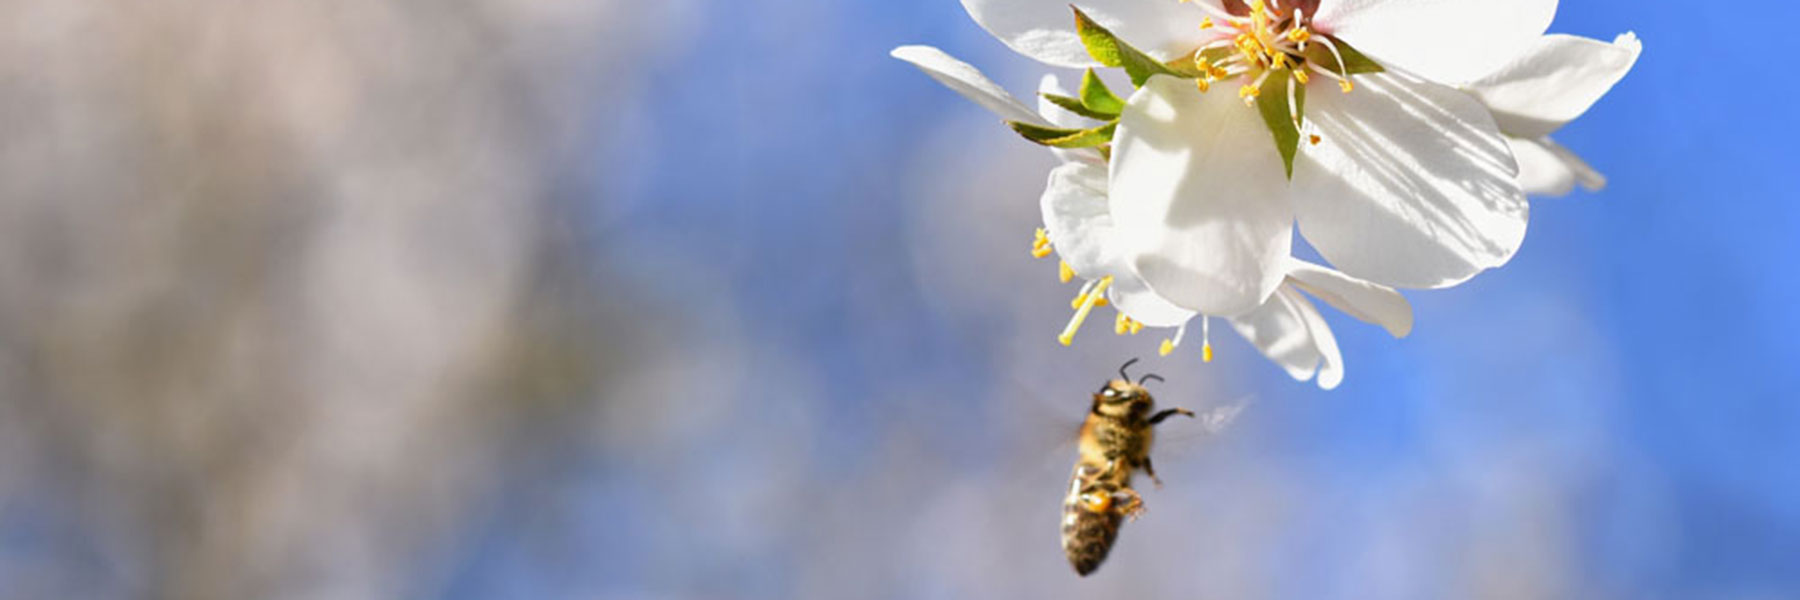 Understanding Manuka Honey Bee on a Manuka Flower